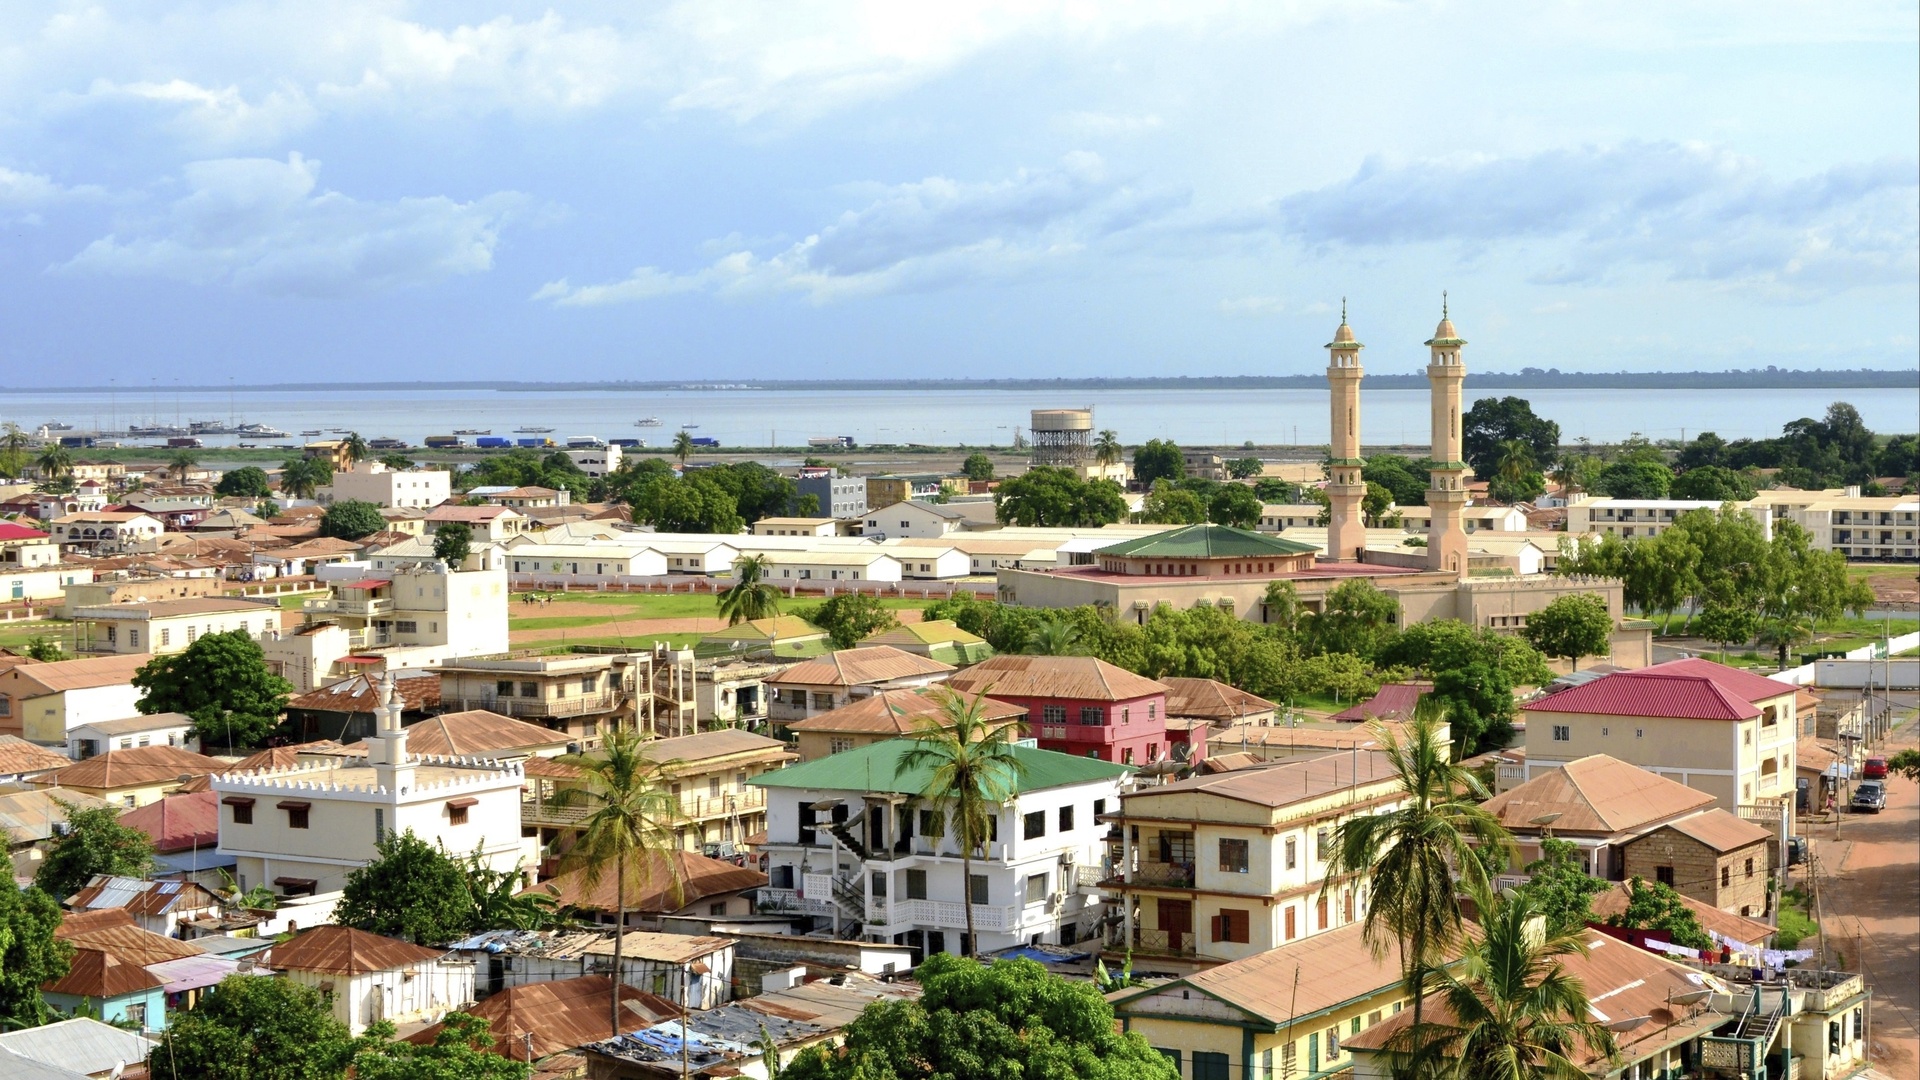 Banjul (Gambia), Lissabon to Kapstadt, Kreuzfahrt rundreise, African adventure, 1920x1080 Full HD Desktop